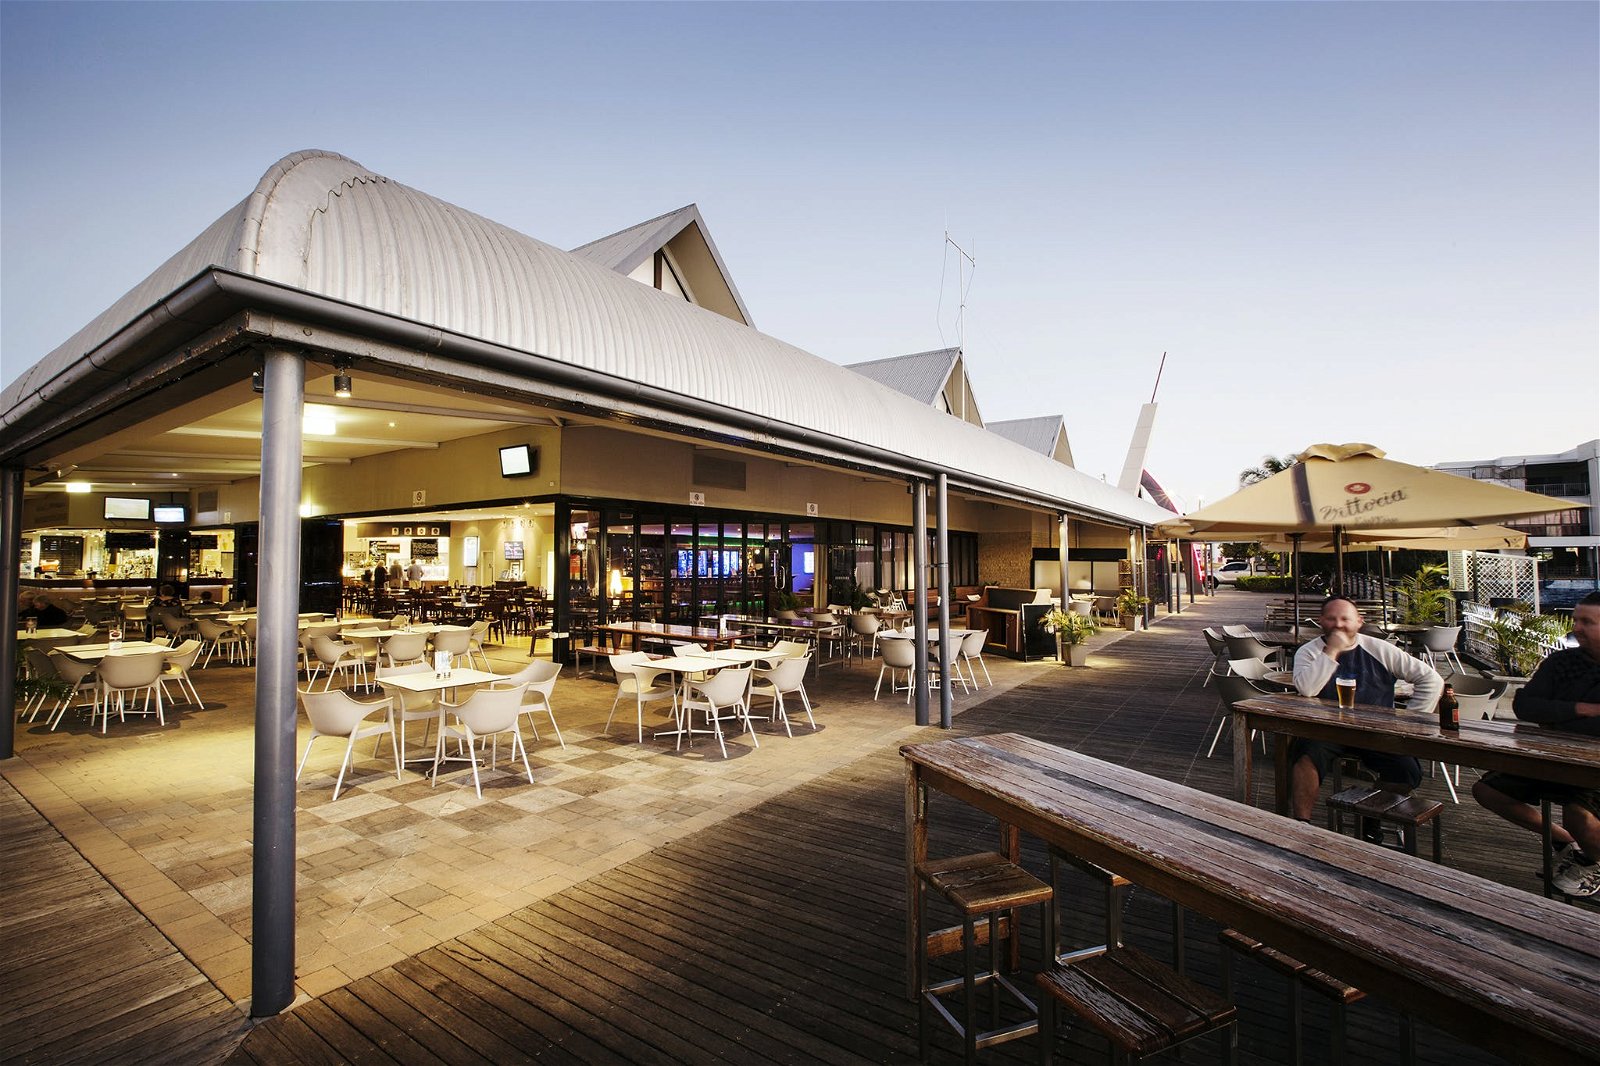 Kawana Waters Hotel - Pubs Sydney